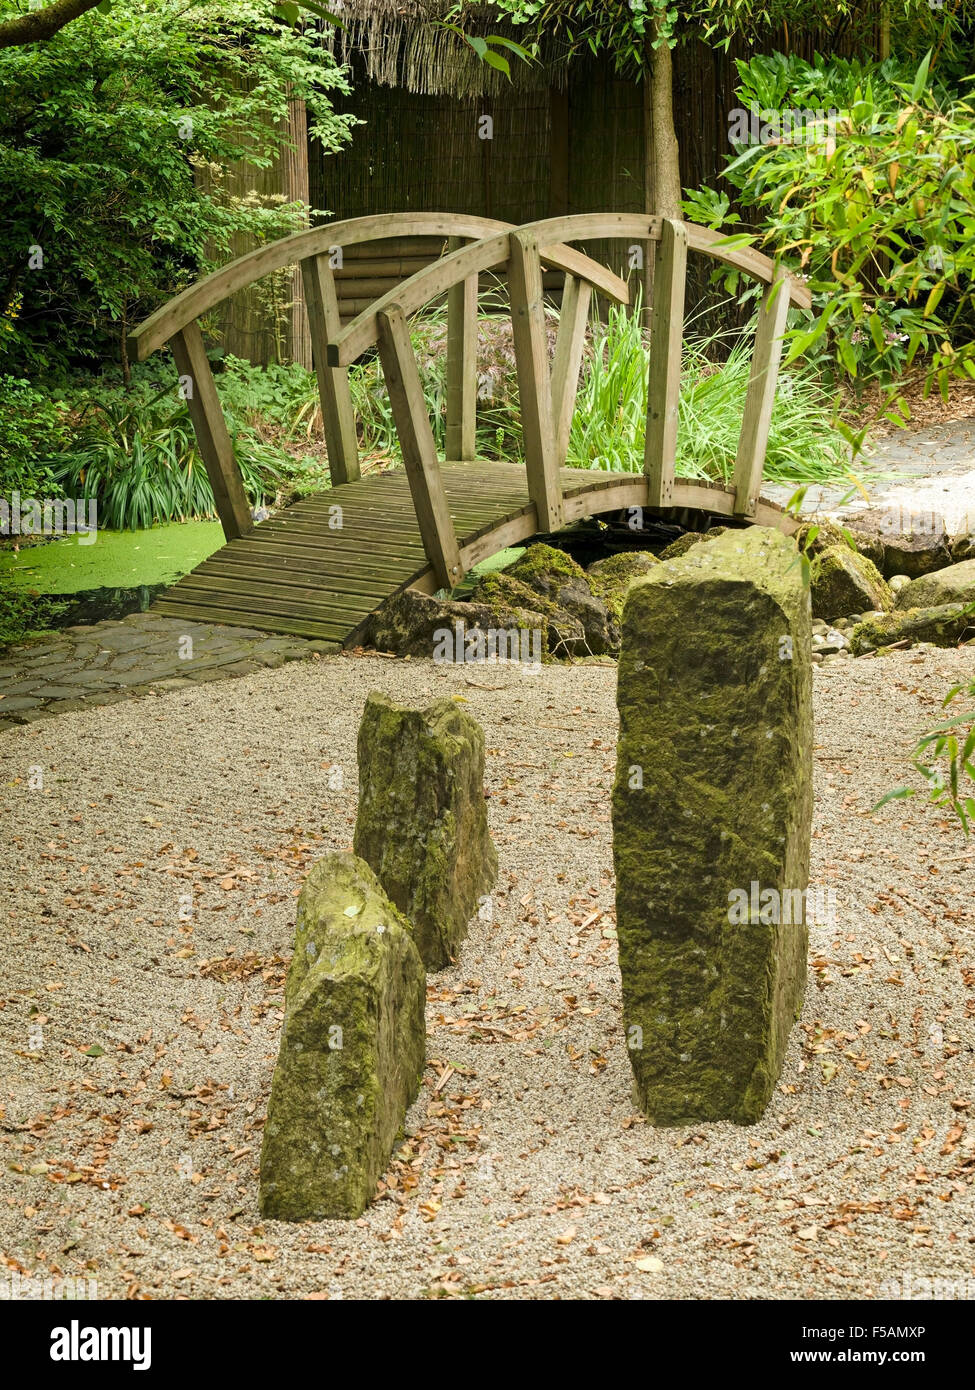 Japanese Zen styled garden with ornate wooden bridge, Barnsdale Gardens, Rutland, England, UK. Stock Photo